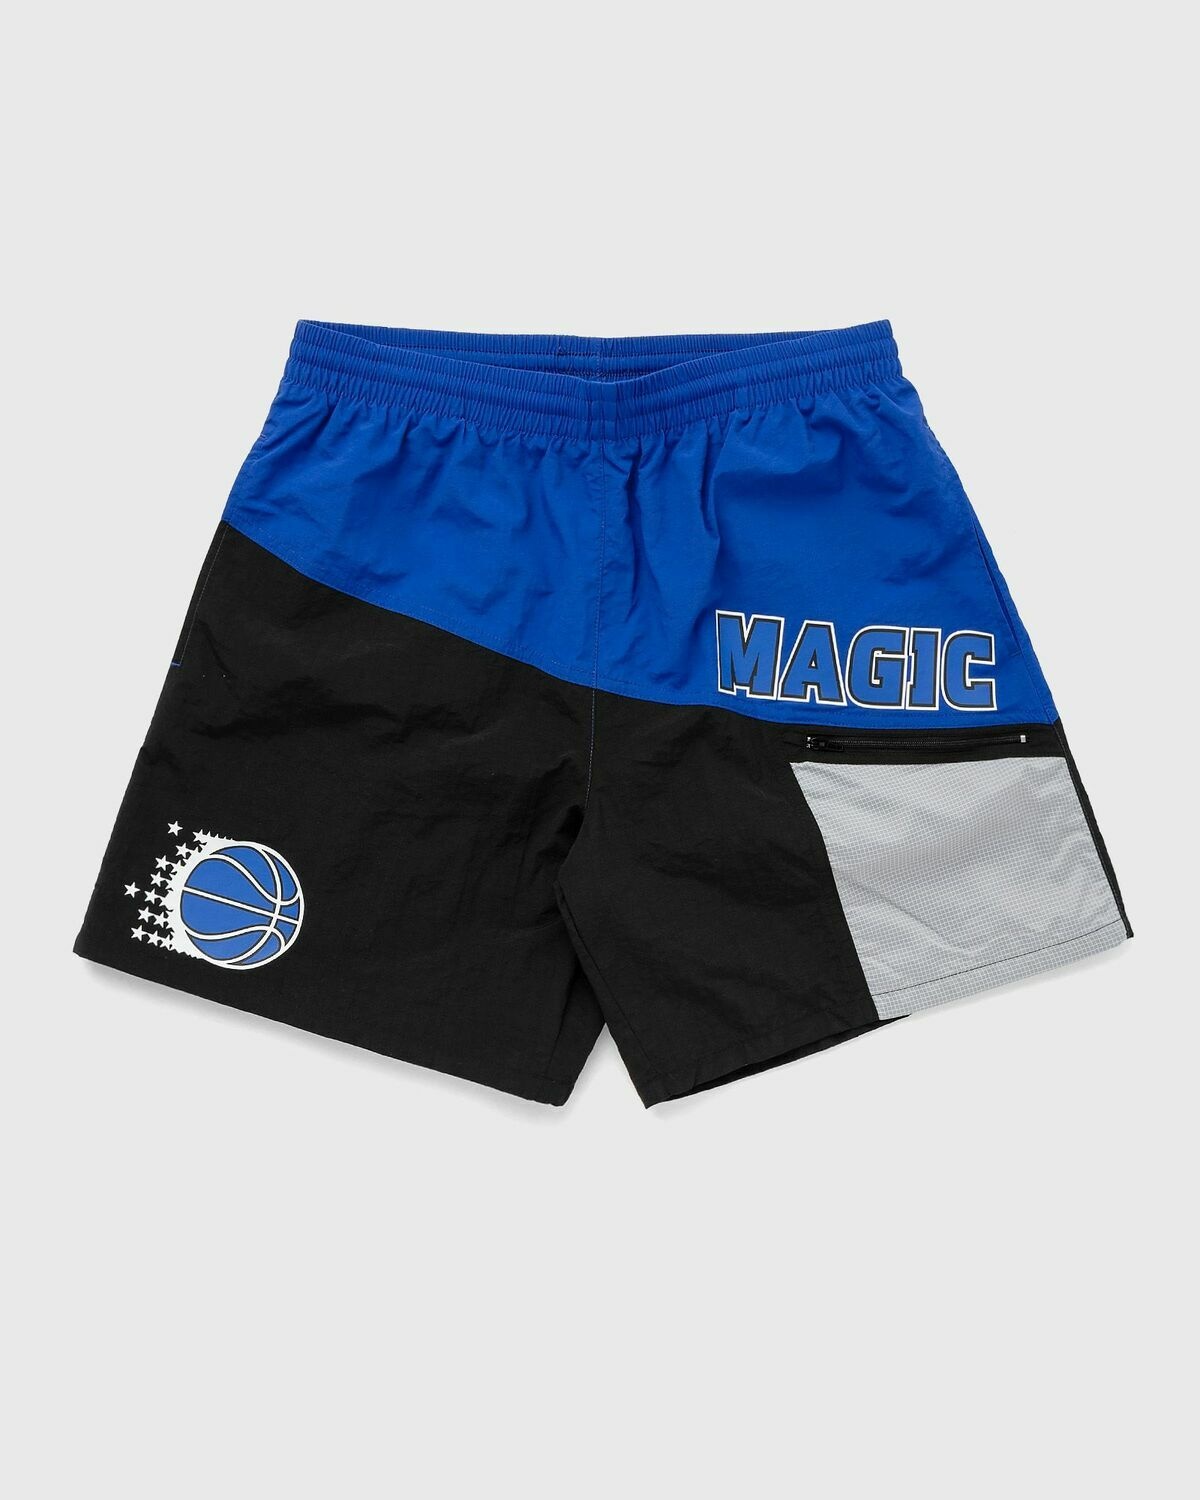 Mitchell & Ness Nba Nylon Utility Short Orlando Magic Black/Blue - Mens - Sport & Team Shorts